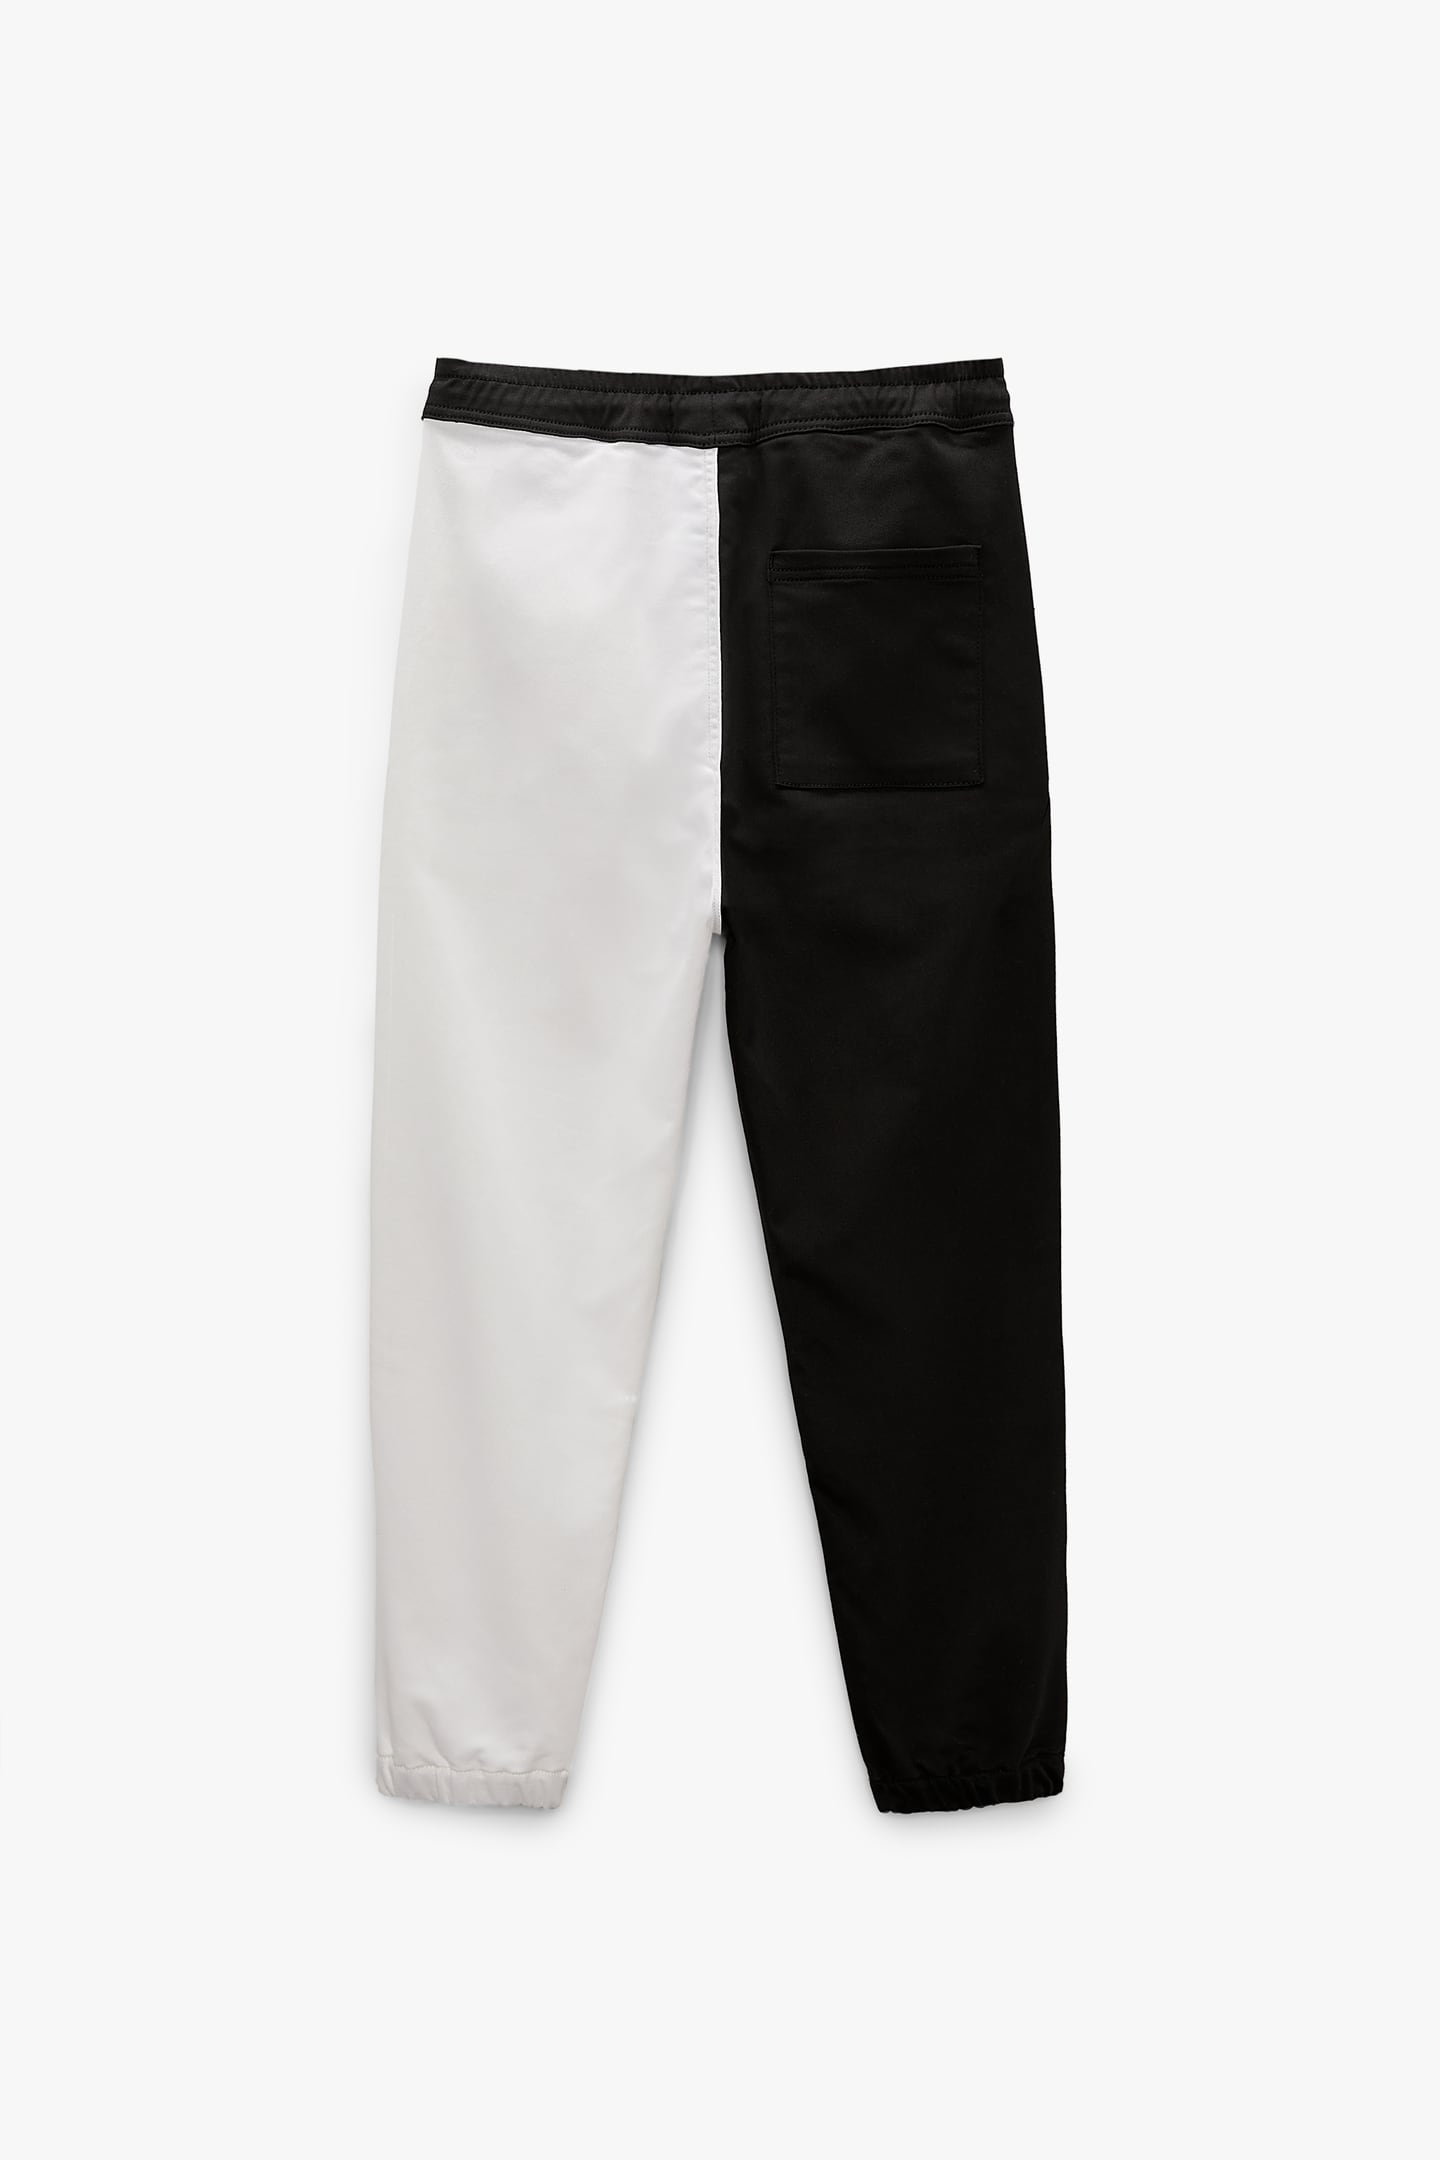 White & Black Comfy Cool Pants